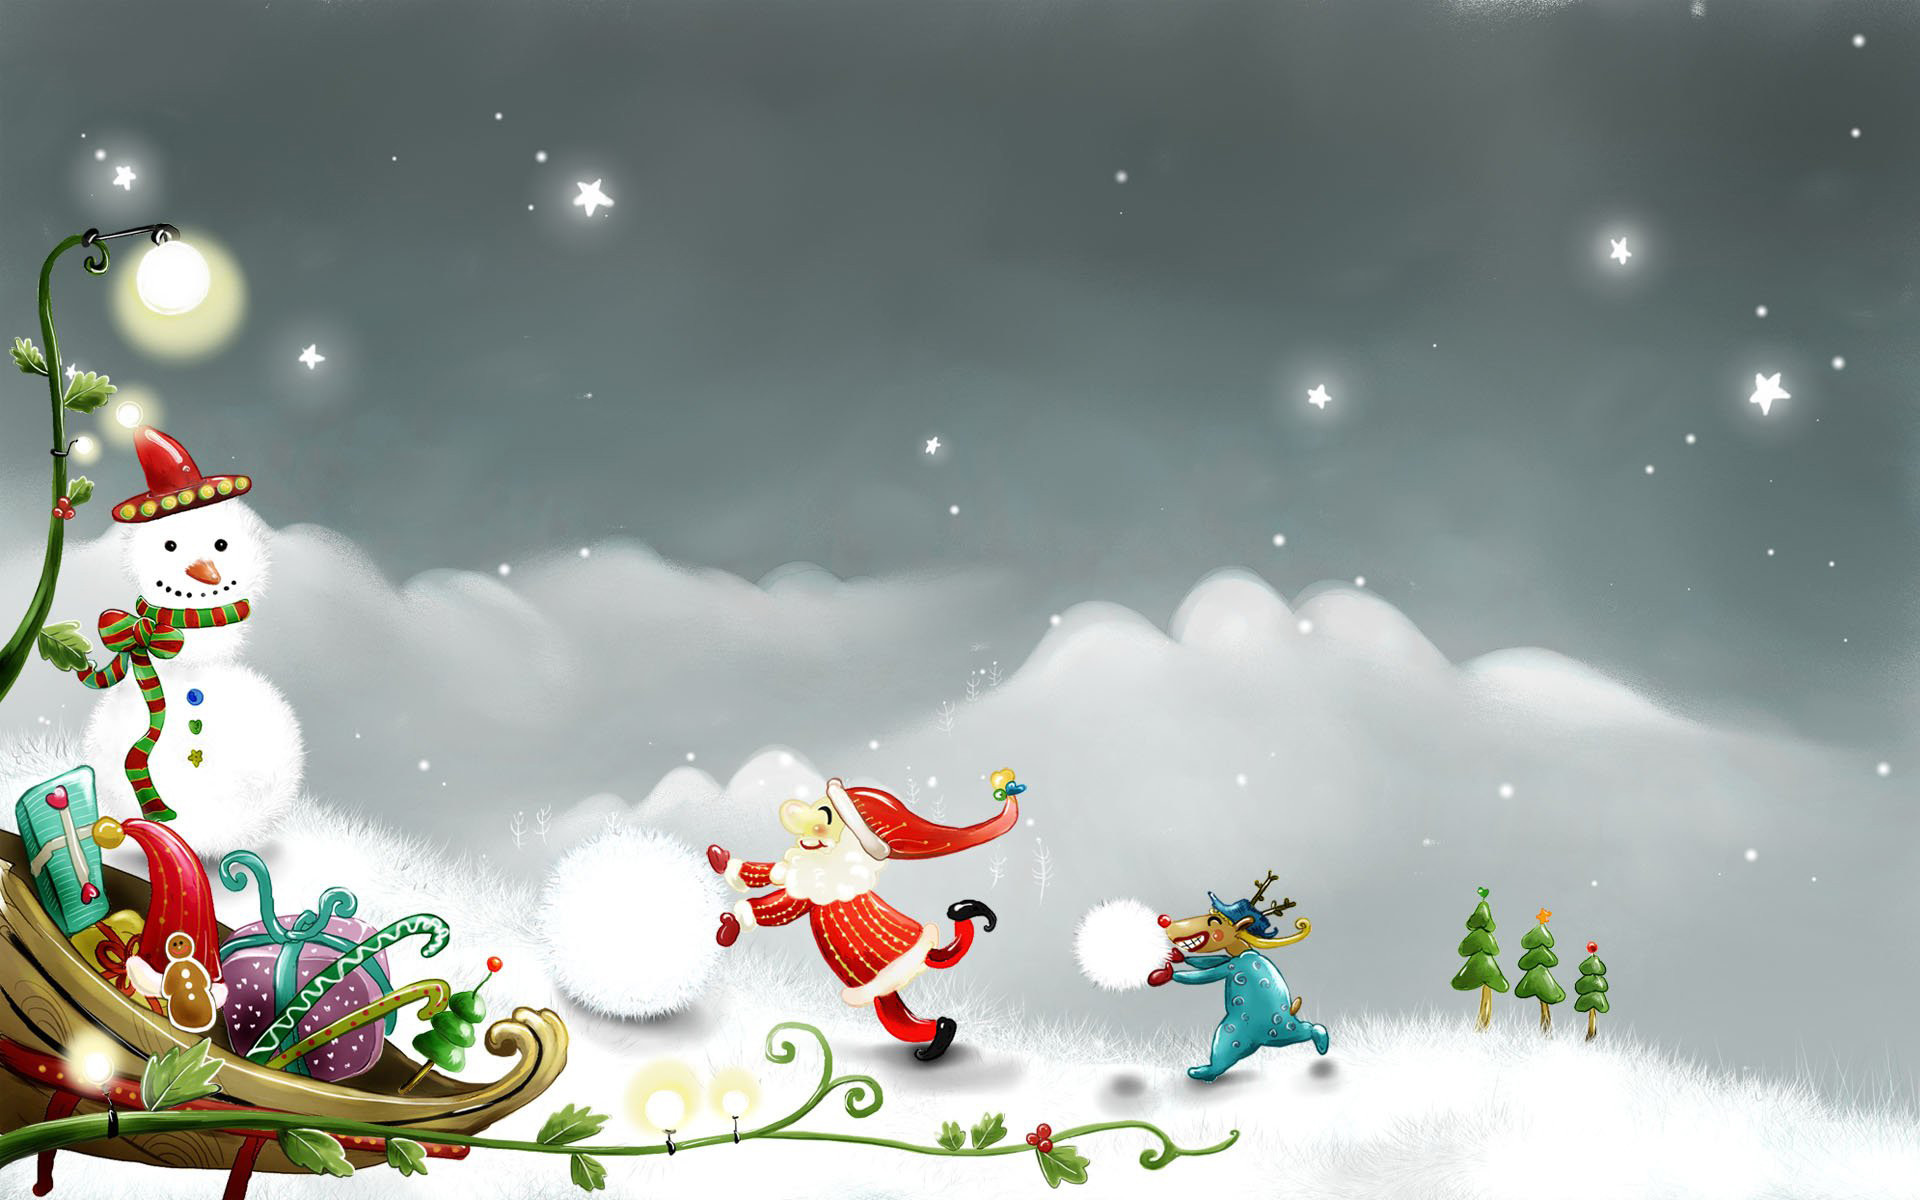 1920x1200 2015 merry Christmas desktop background